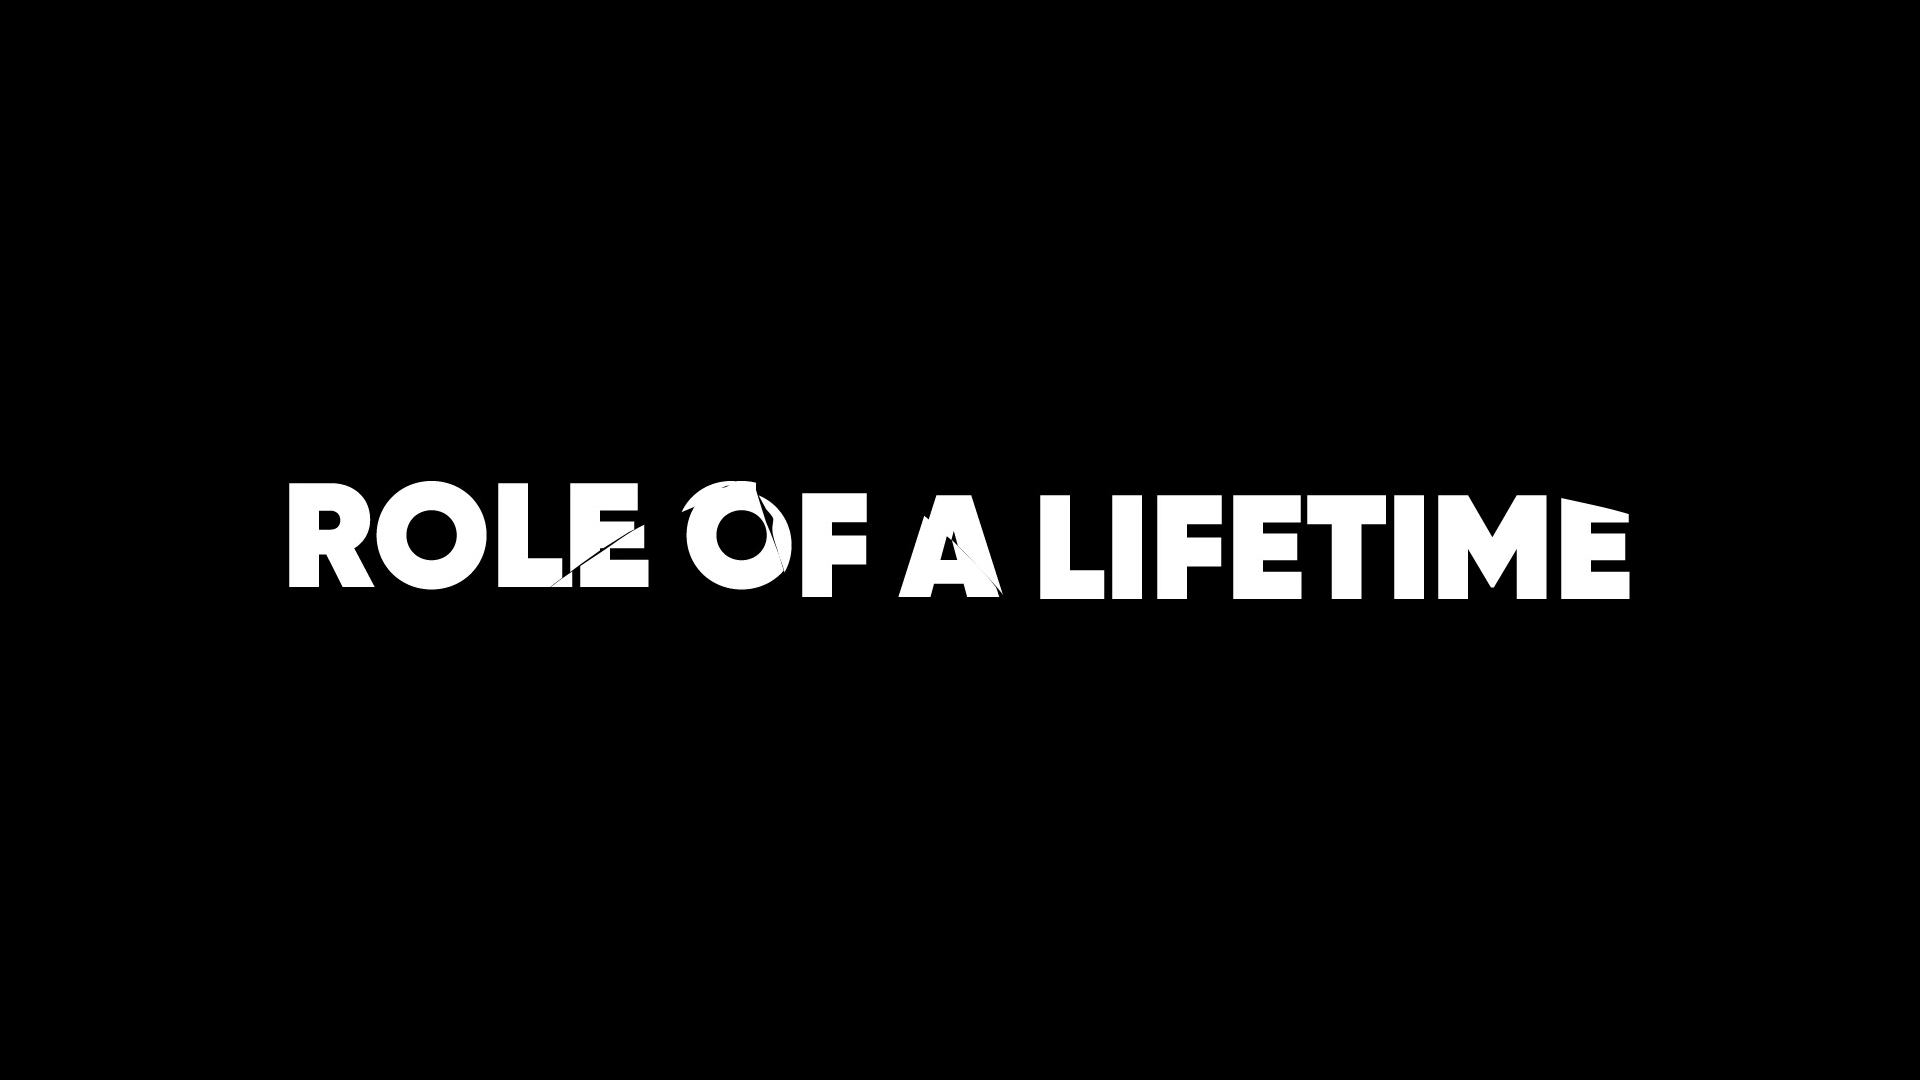 Role of a Lifetime